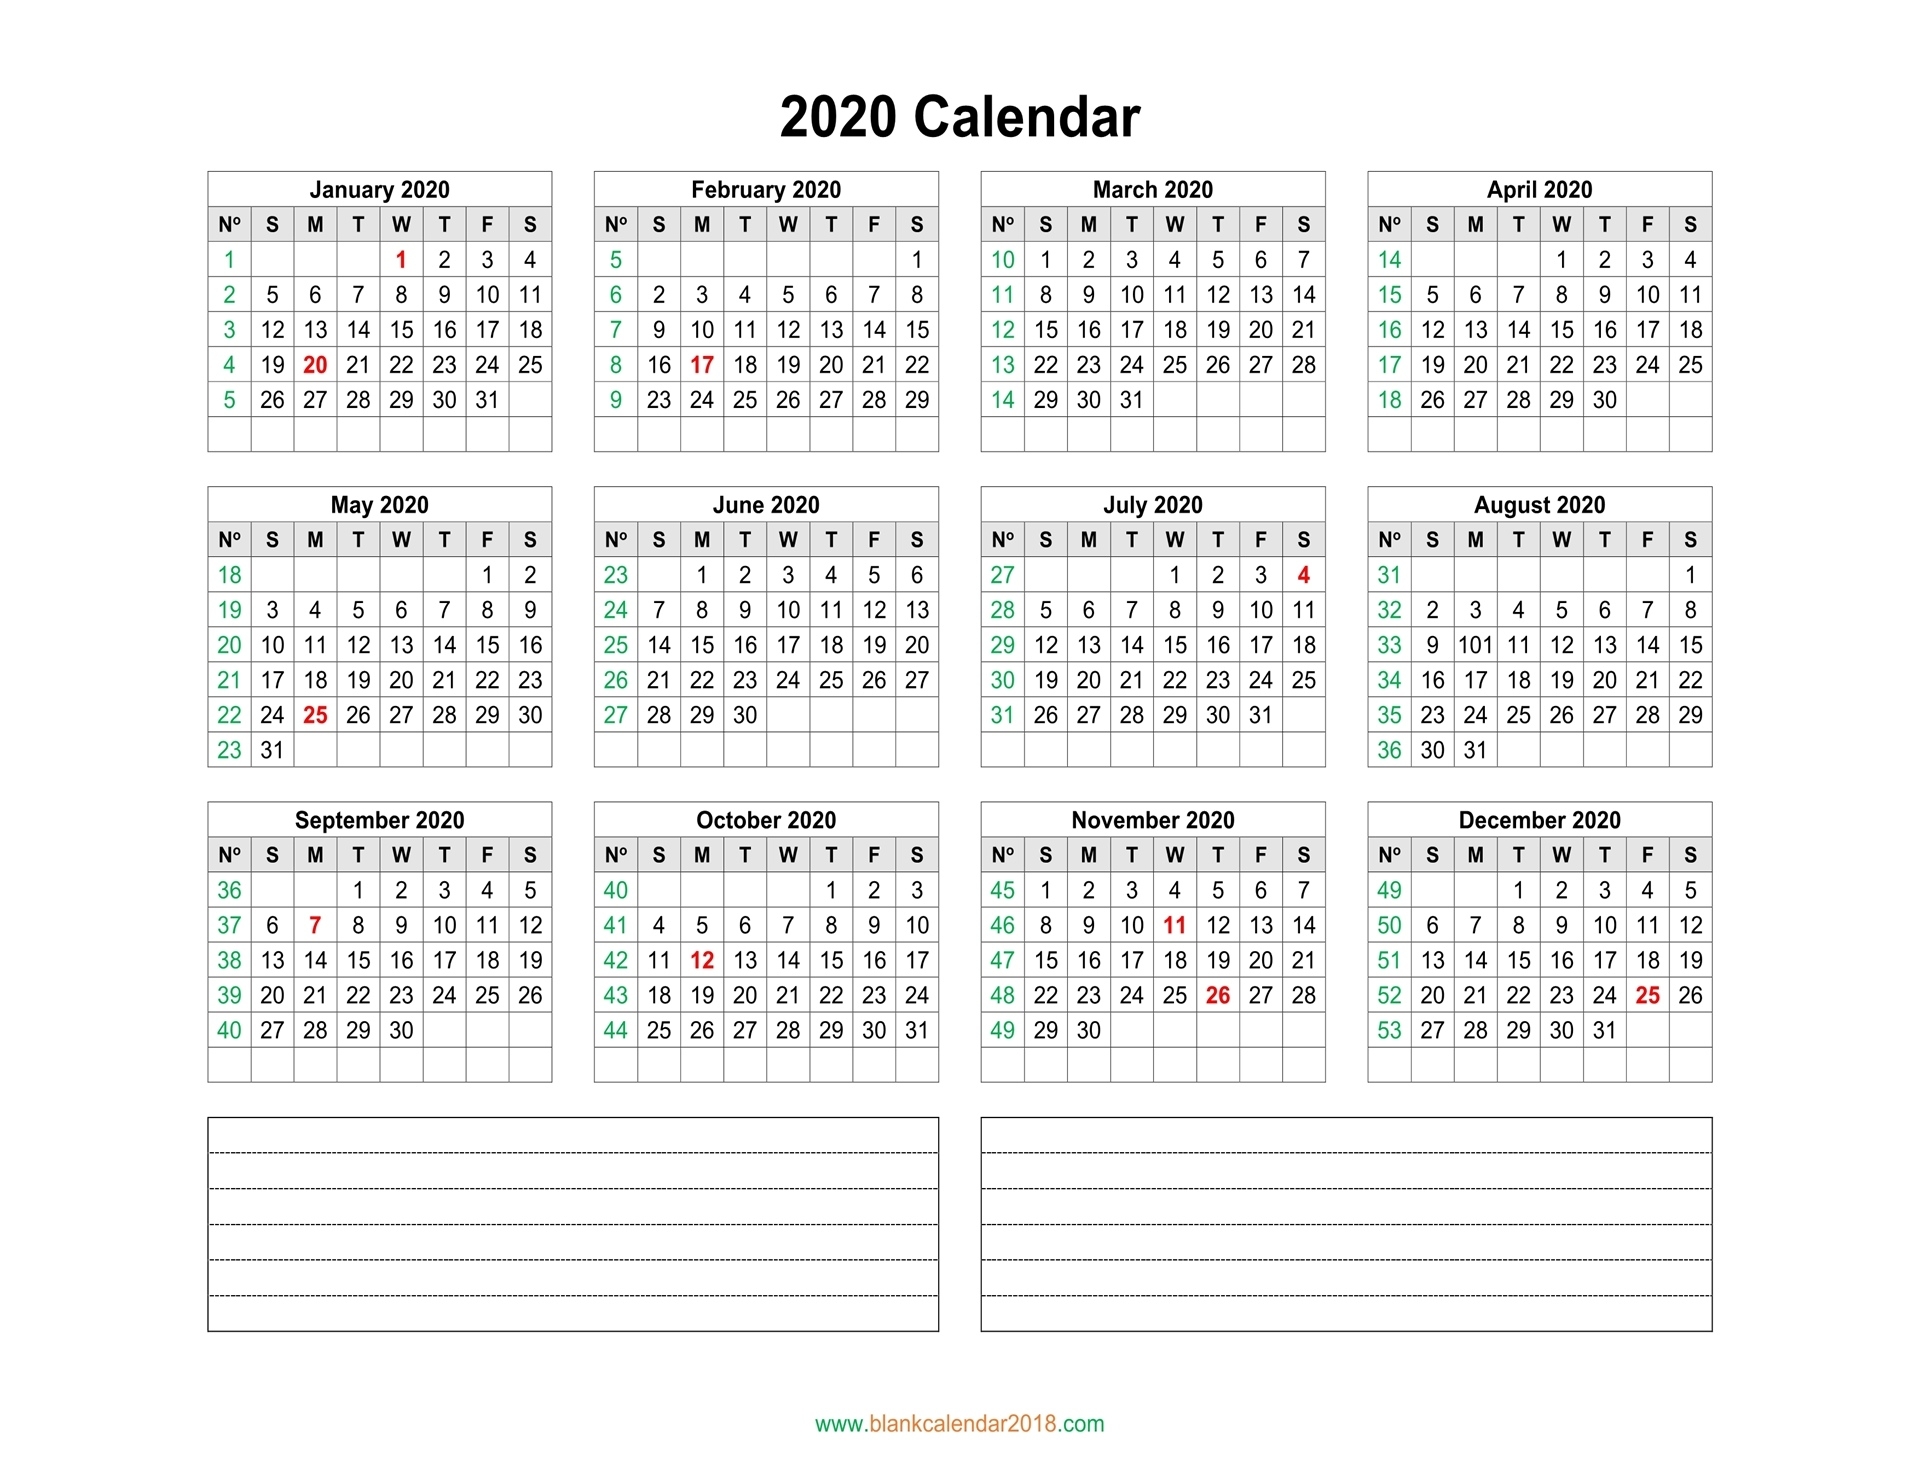 Blank Calendar 2020 Blank Calendar 2020 Monthly Portrait